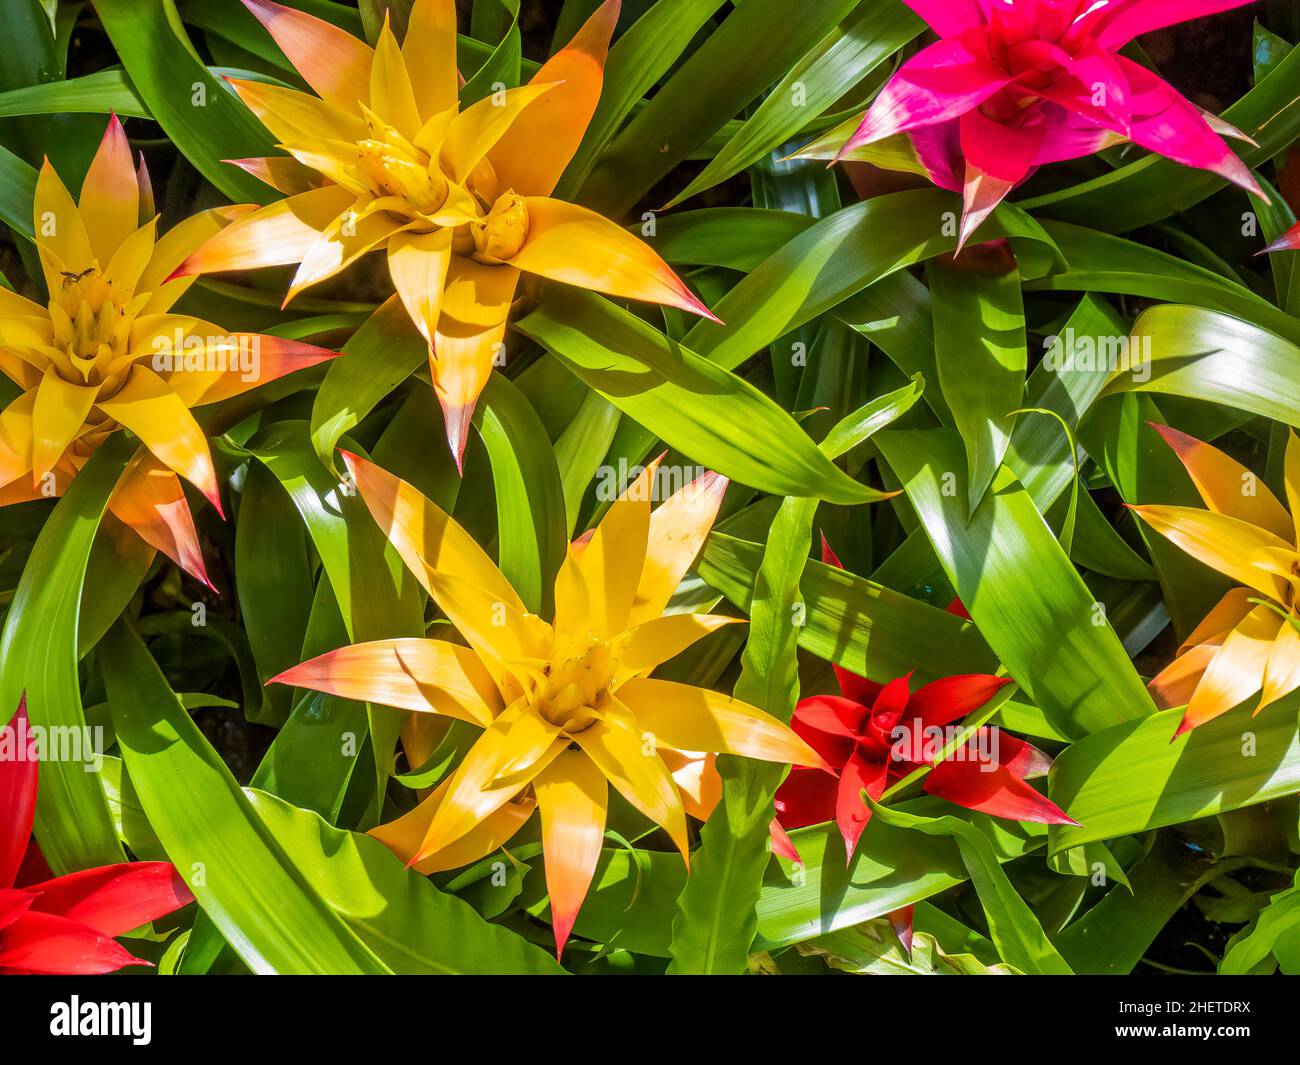 Mulkticolored Bromeliad plants filling frame Stock Photo